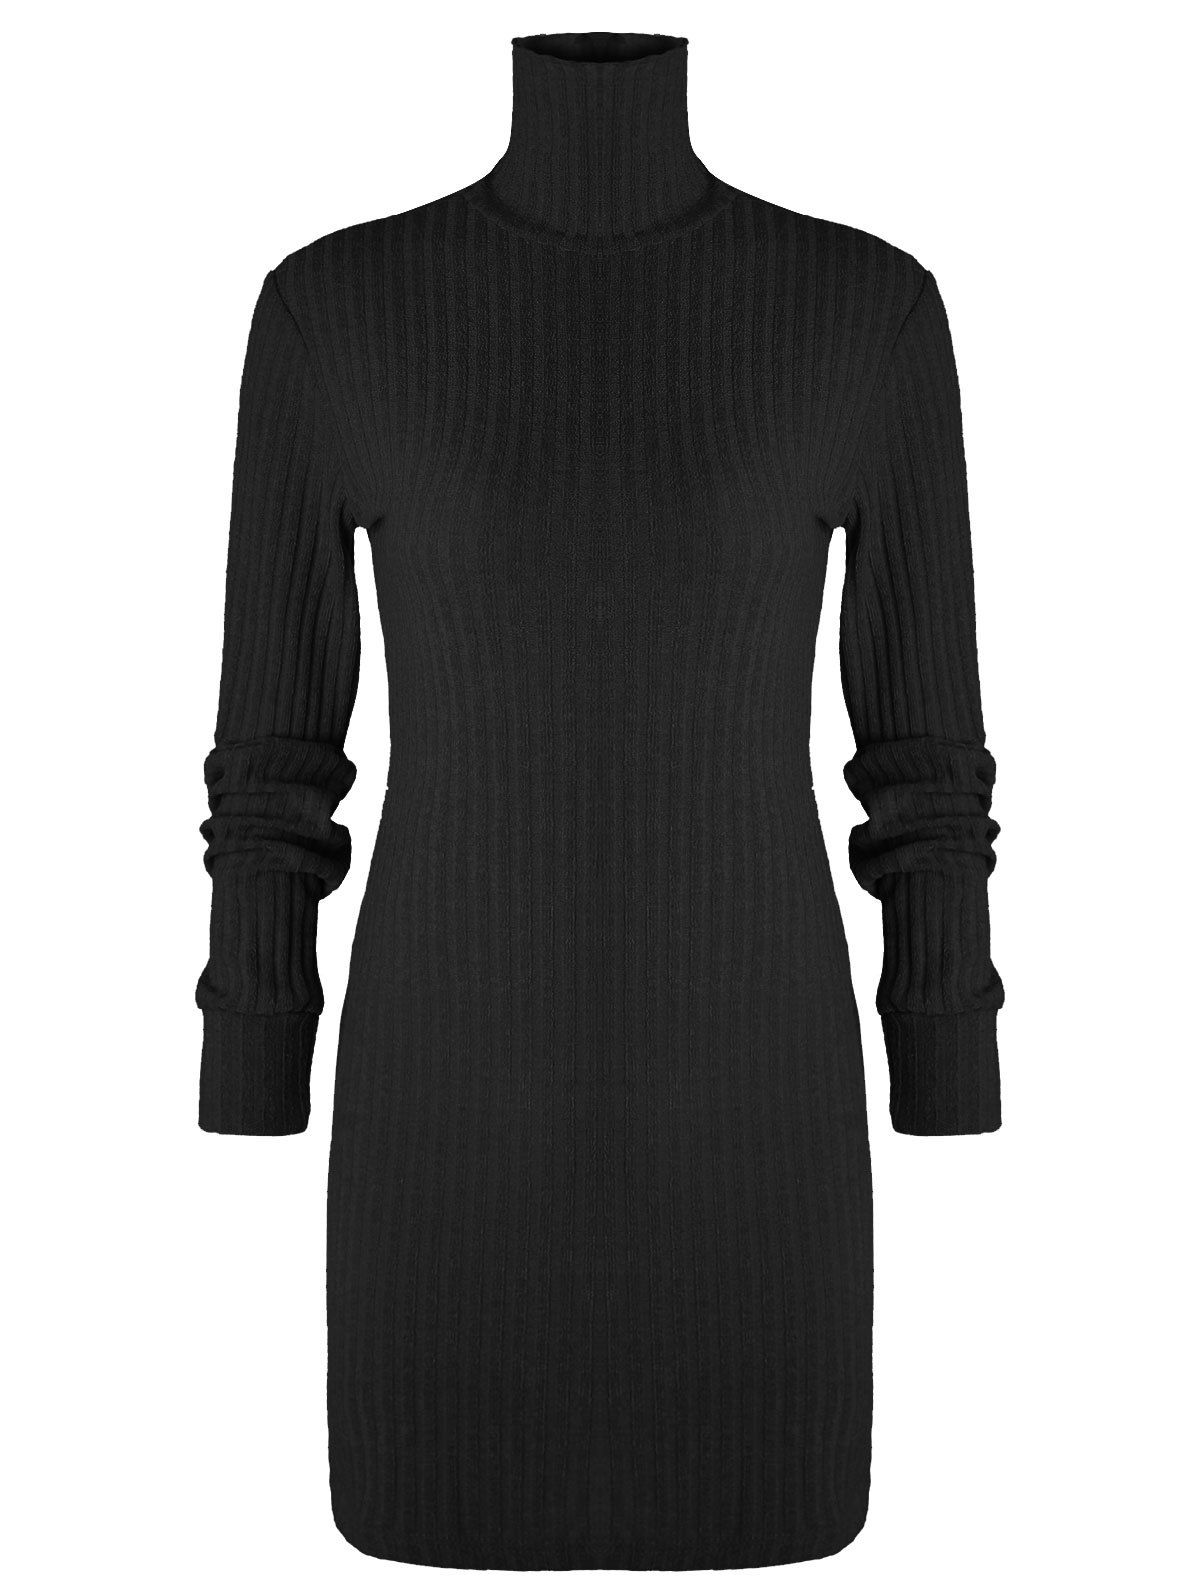 [26% OFF] 2021 Tunic Turtleneck Sweater In BLACK | DressLily